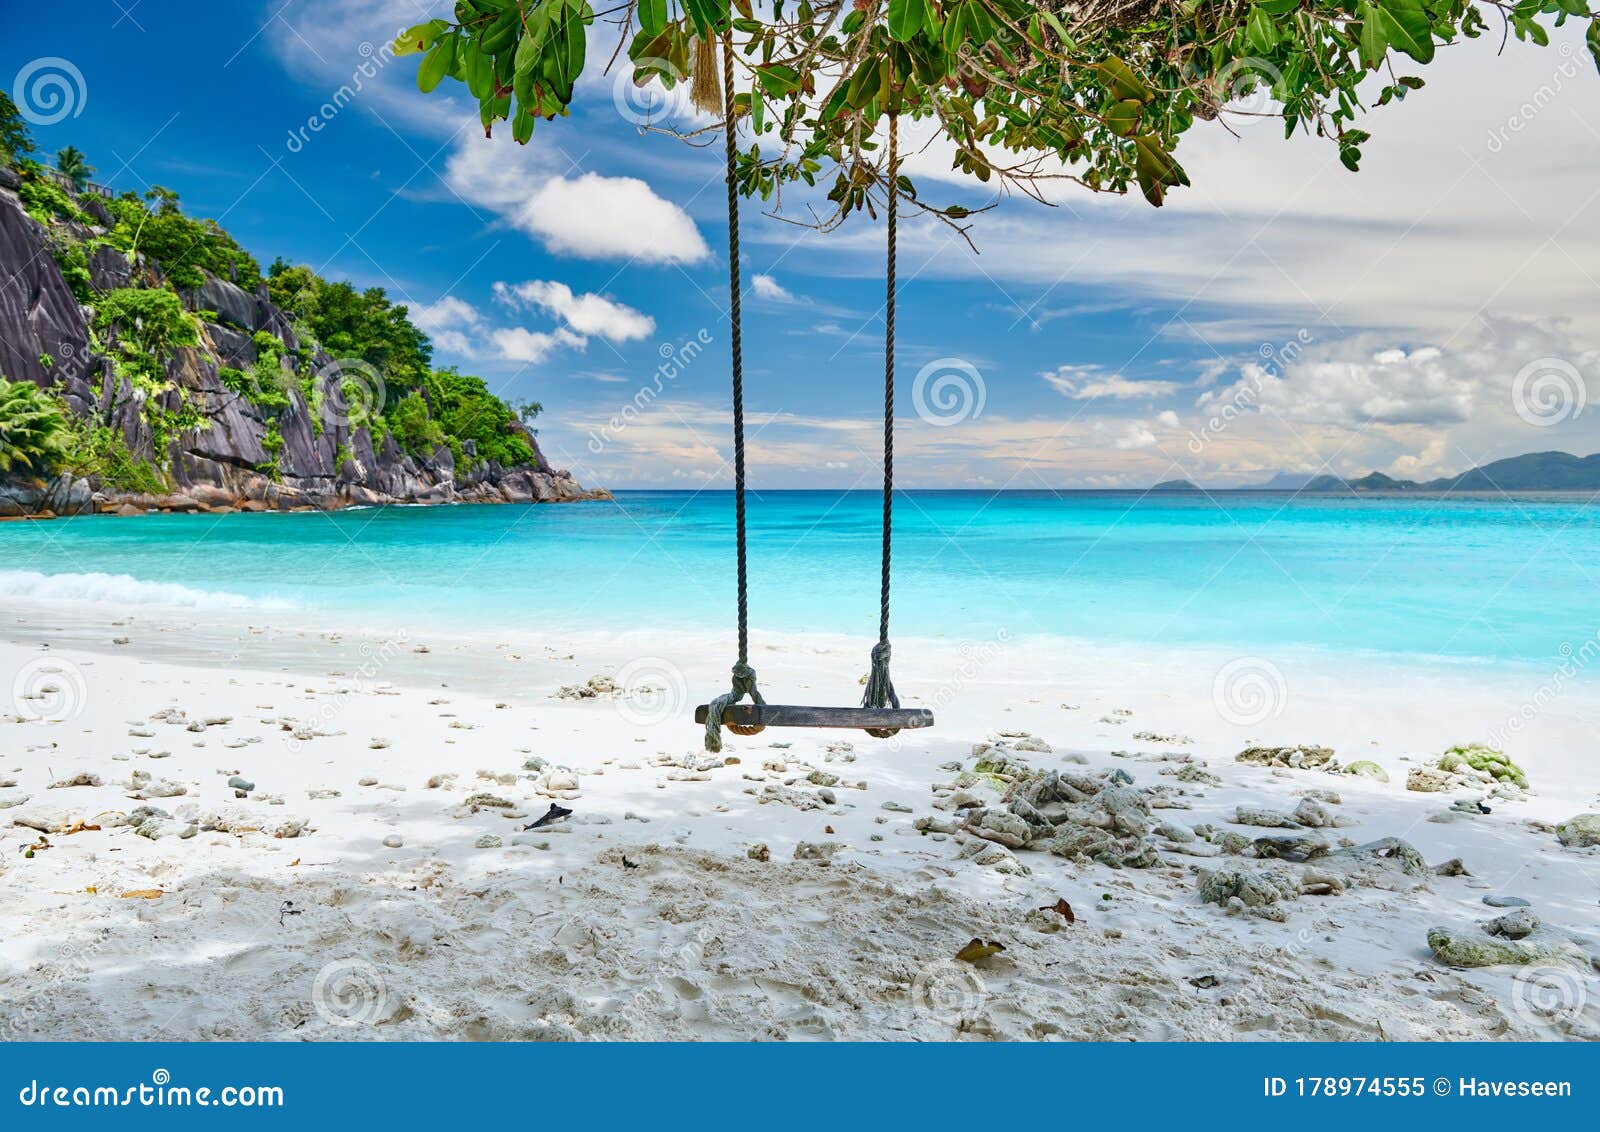 beautiful petite anse beach at seychelles